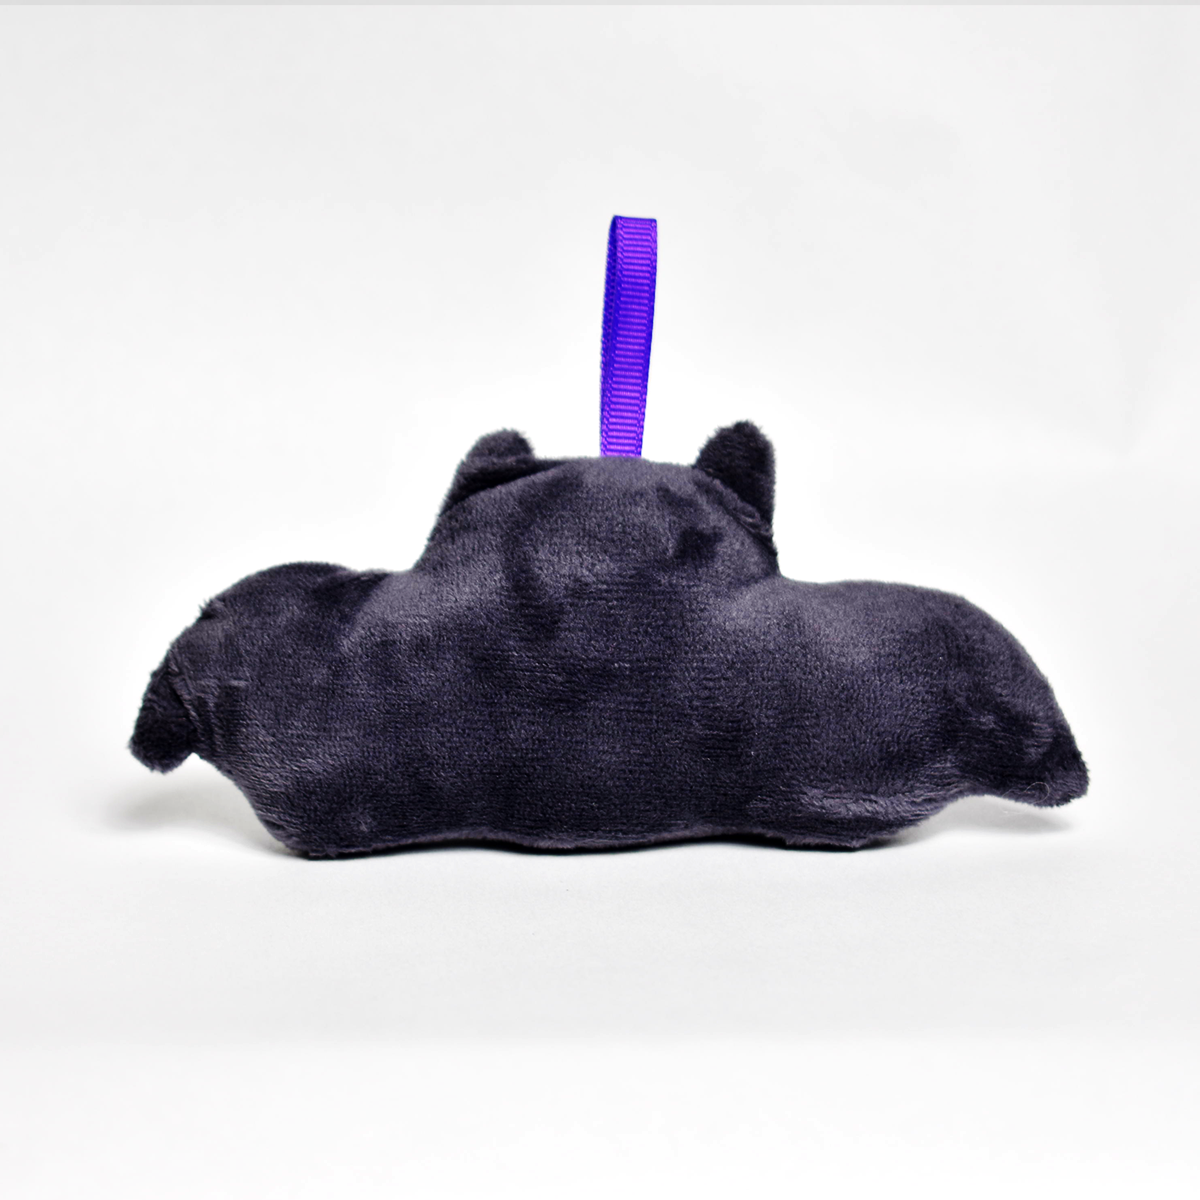 amifa Halloween Stuffed Toy Ornament Large - Bat